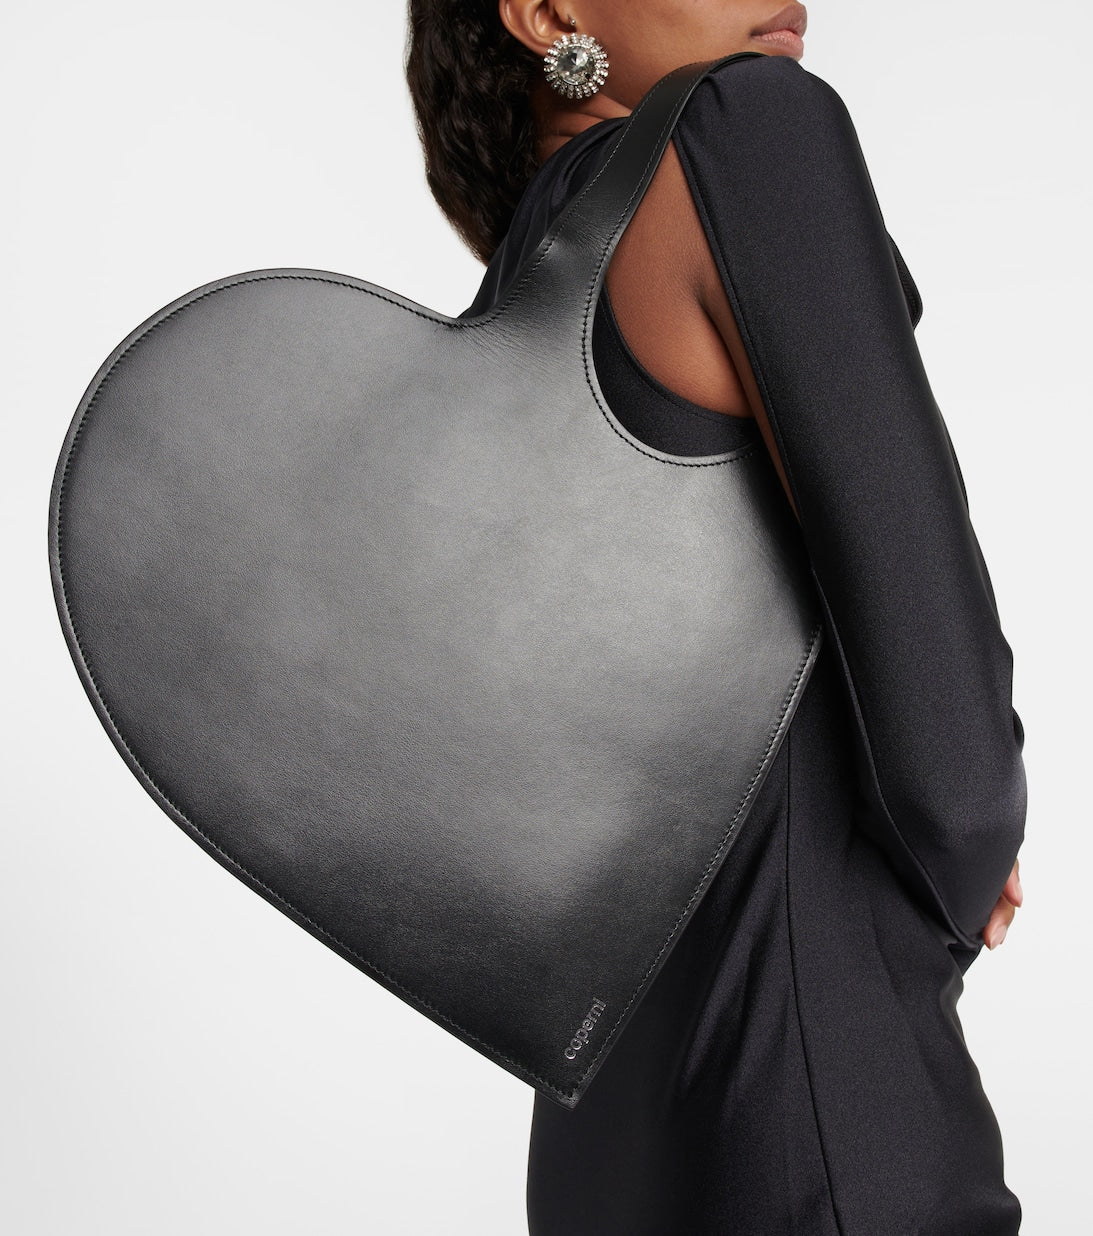 Coperni heart shaped black leather tote bag -